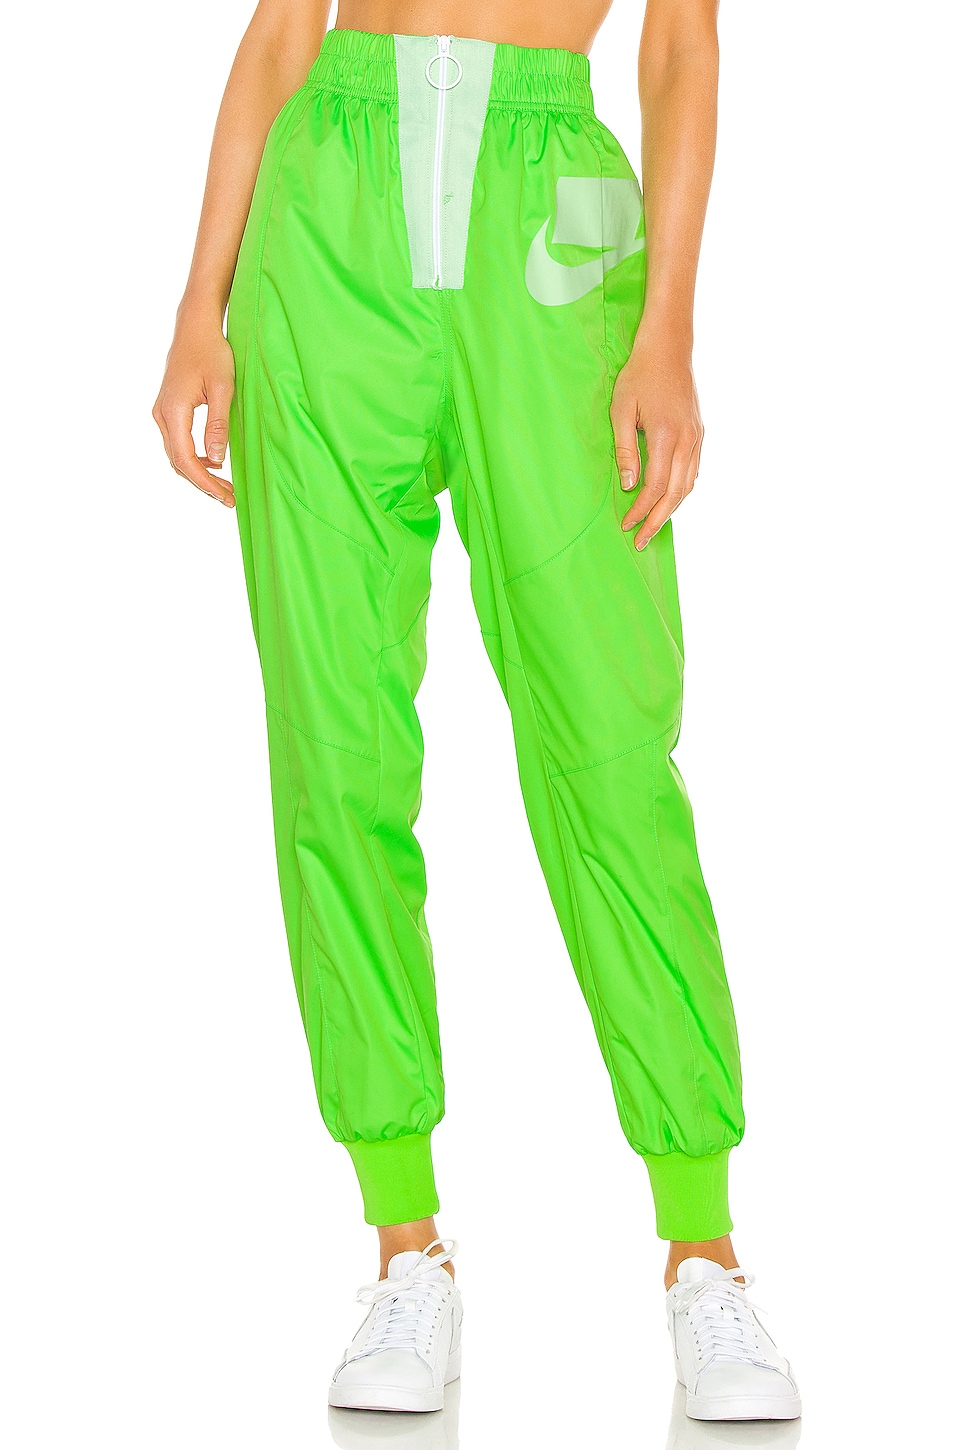 nike neon green pants